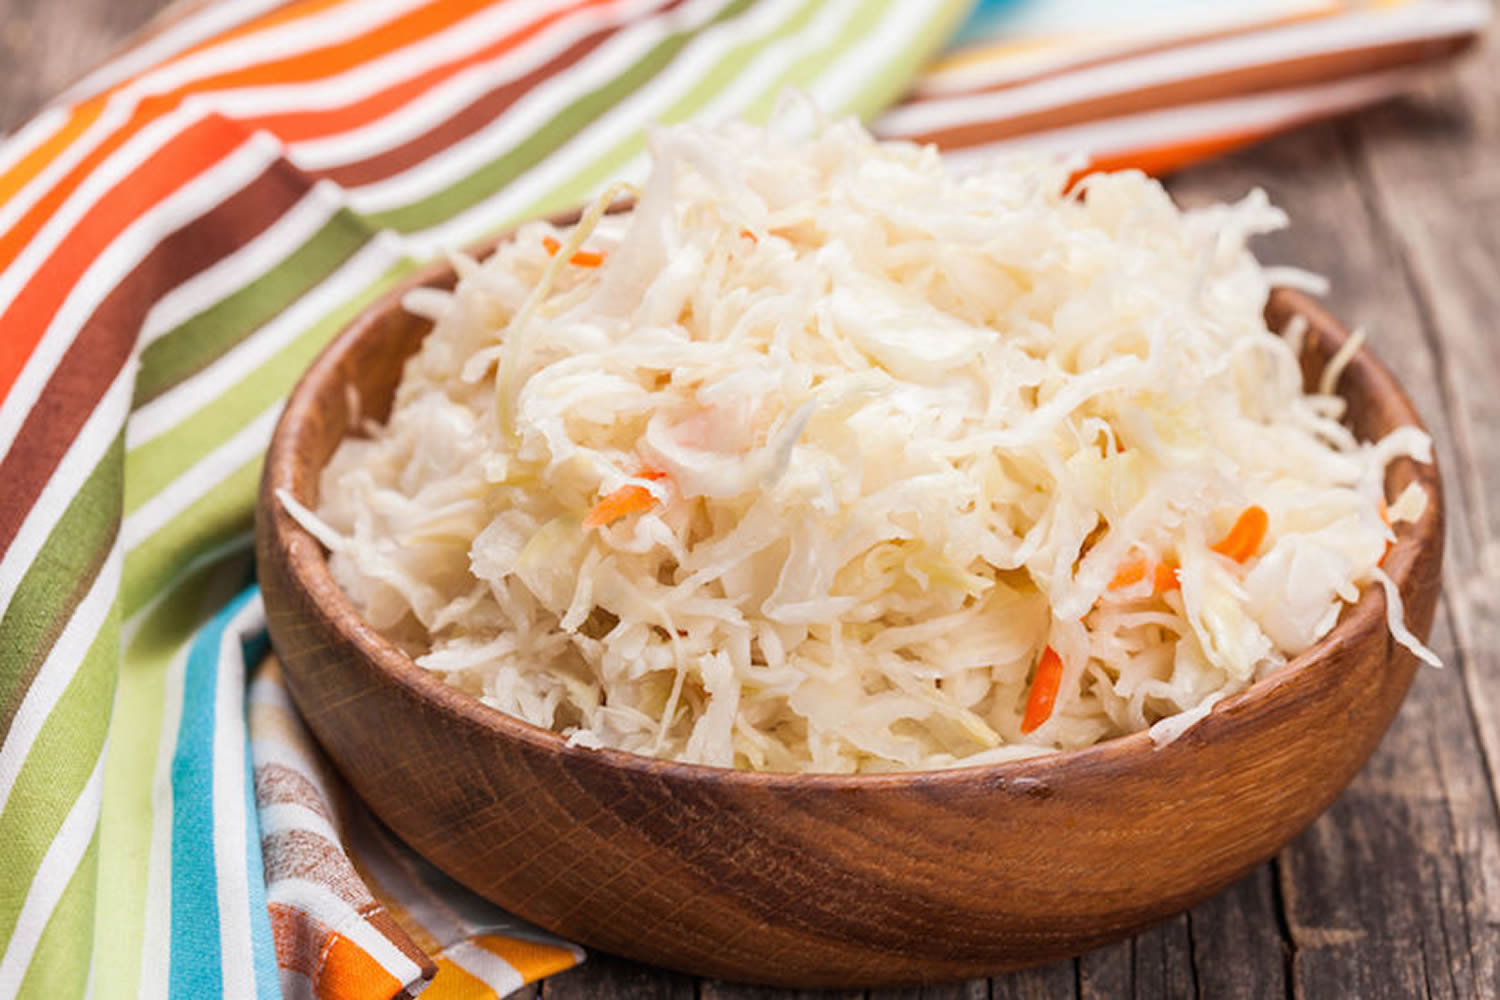 Sauerkraut - Nutrition Facts, Calories - Is Sauerkraut Good For You